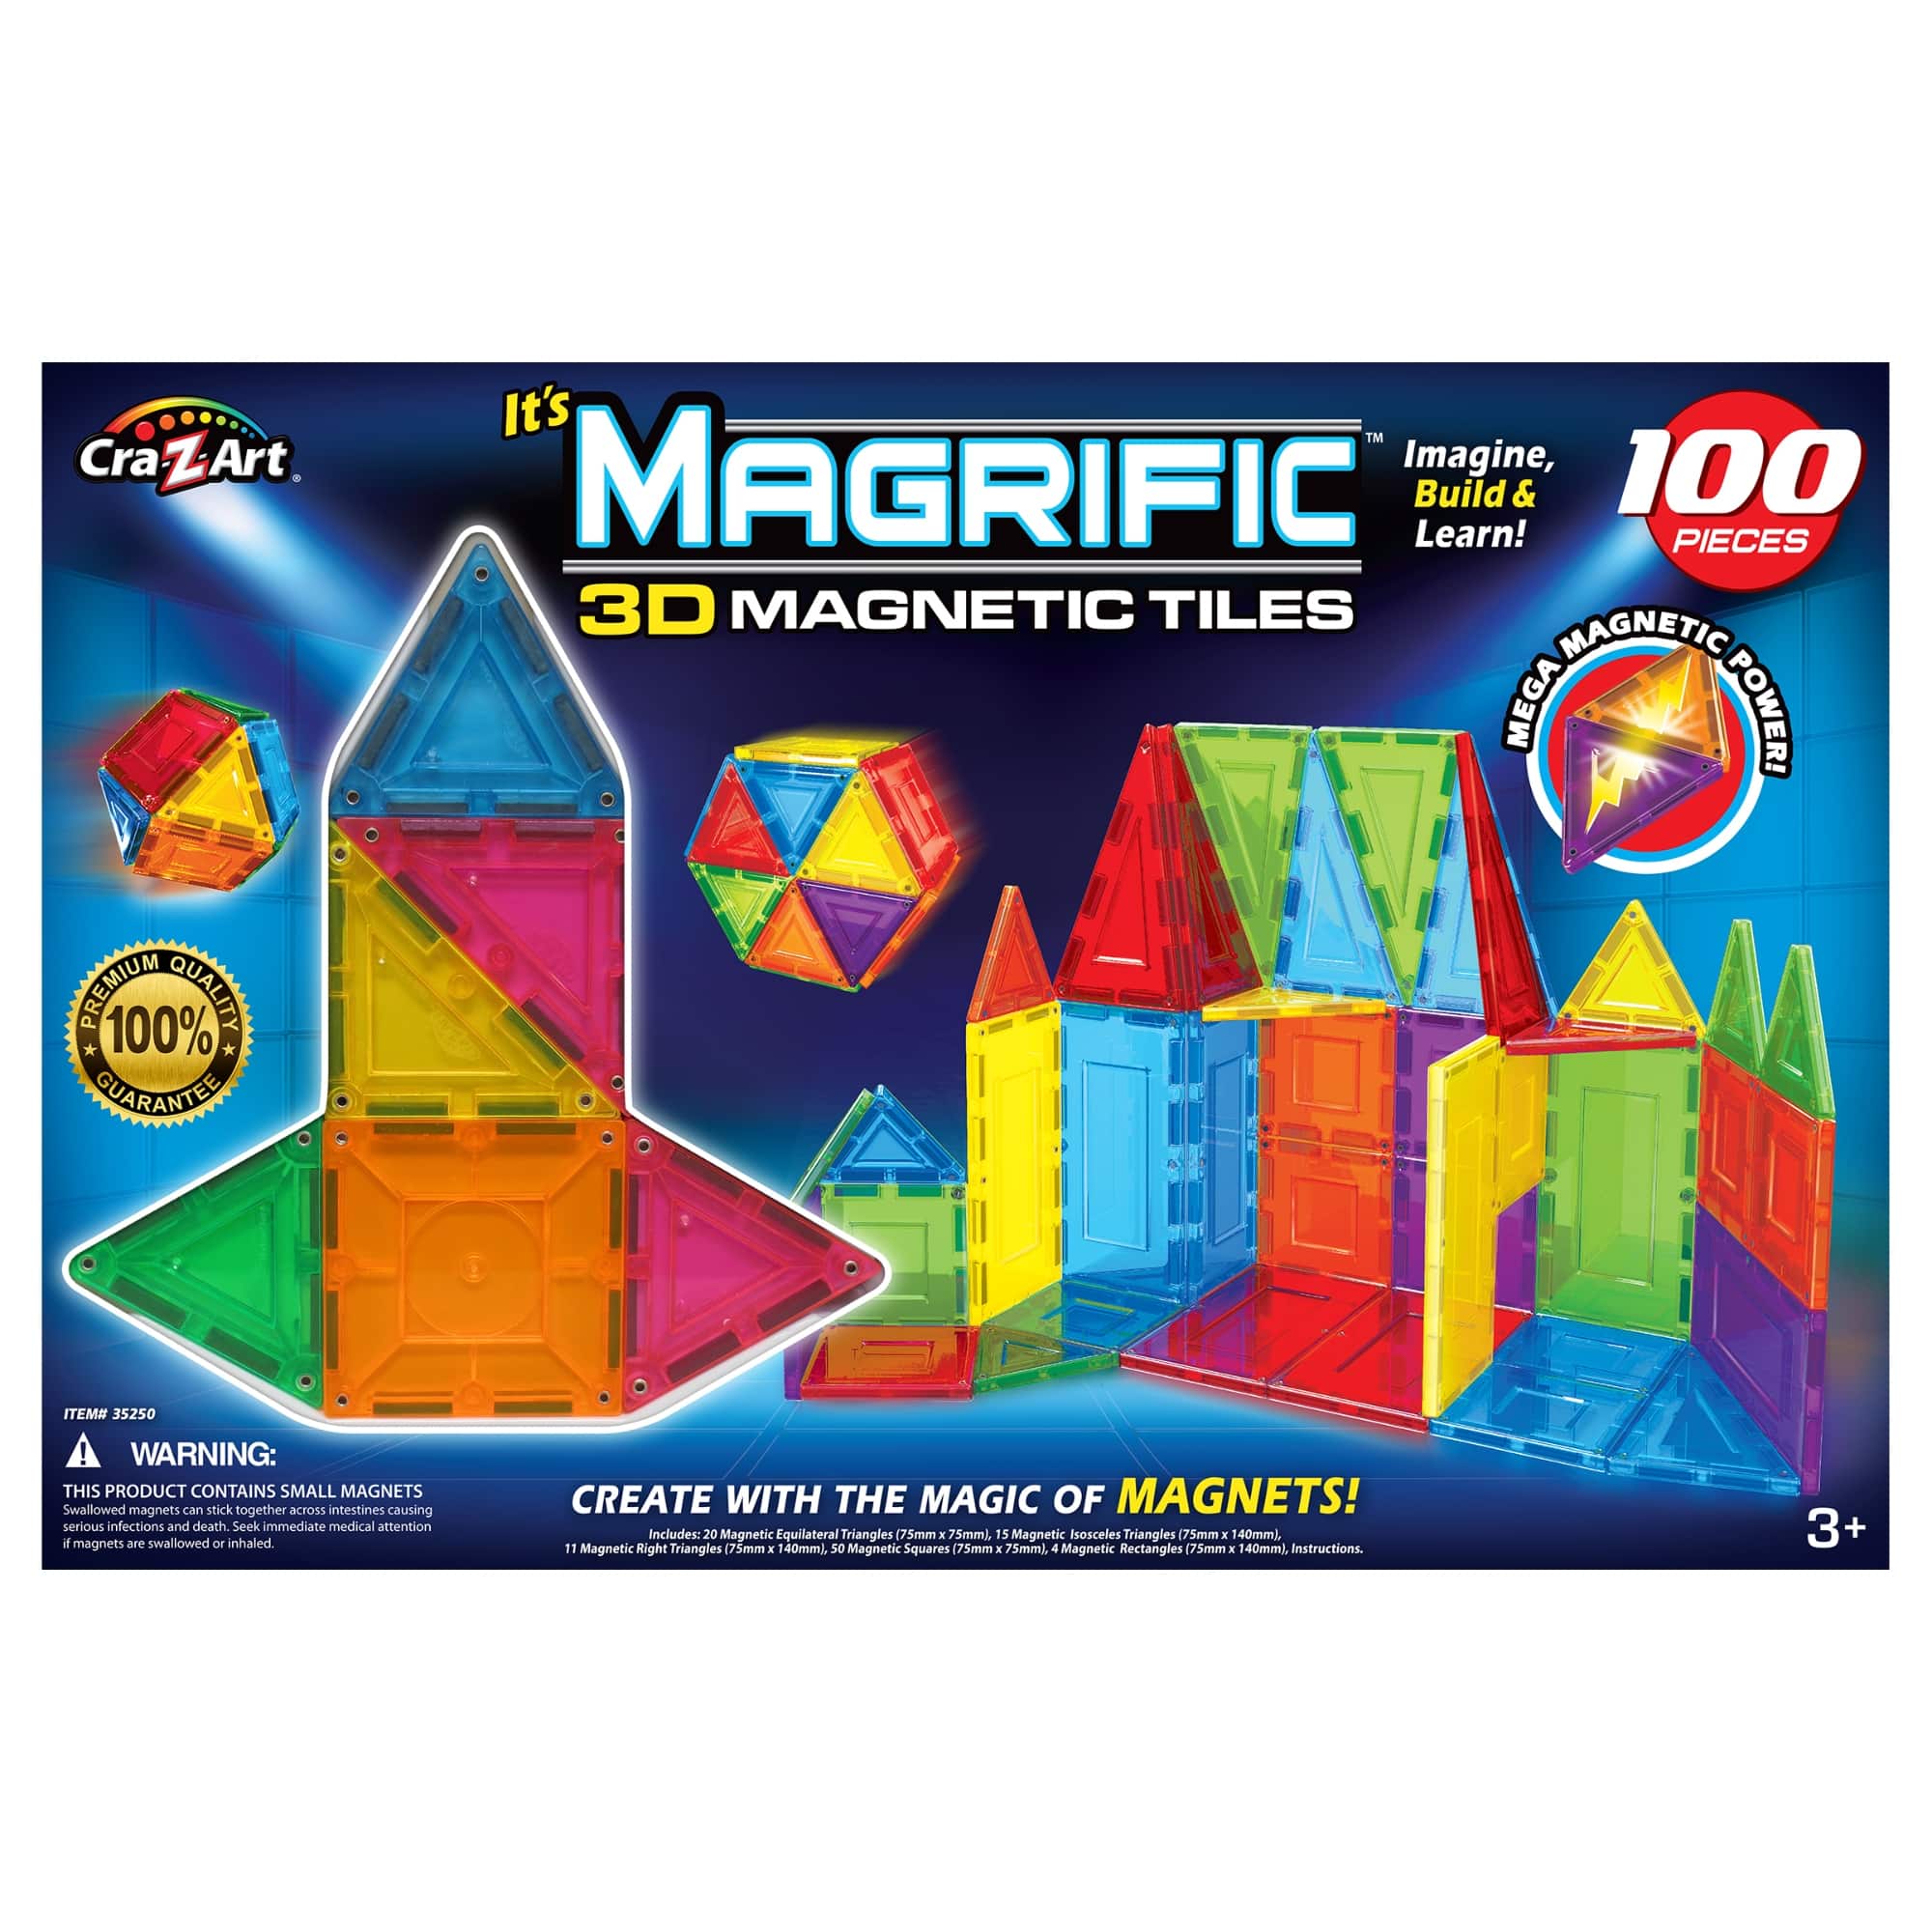 Cra-Z-Art Magrific 3D Magnetic Tiles Magnetic Toy Set, 100ct.